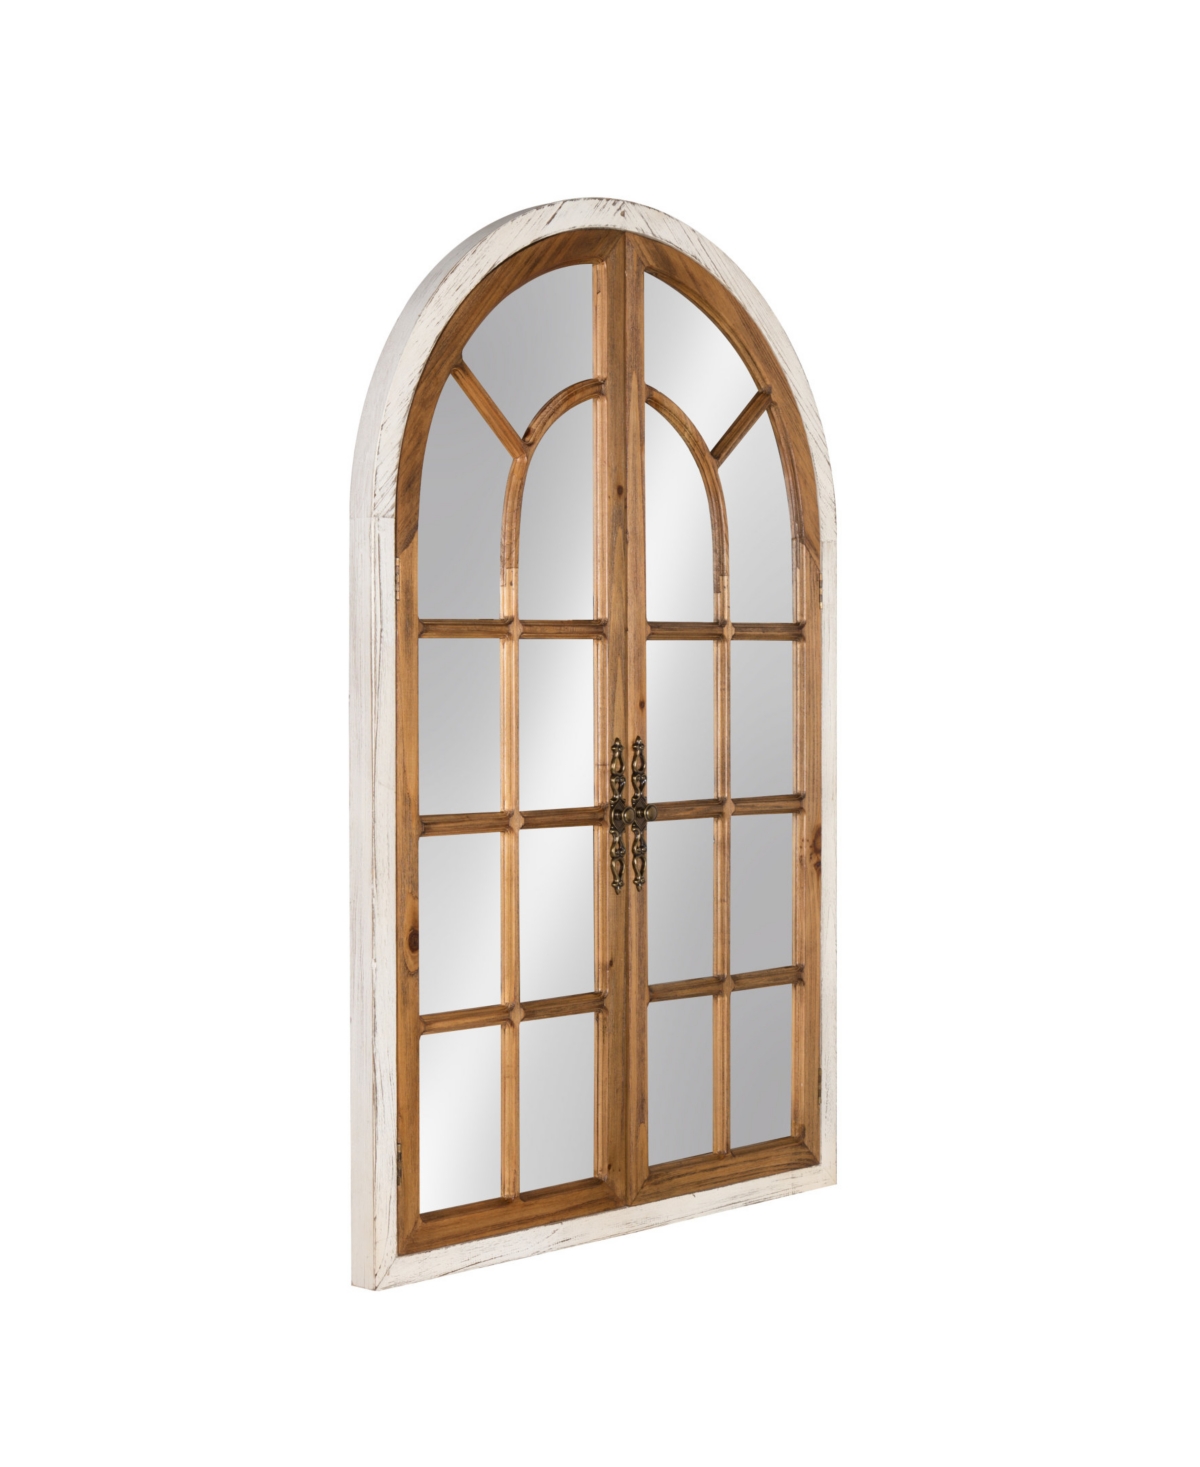 Boldmere Wood Windowpane Arch Mirror - 28" x 44" - White